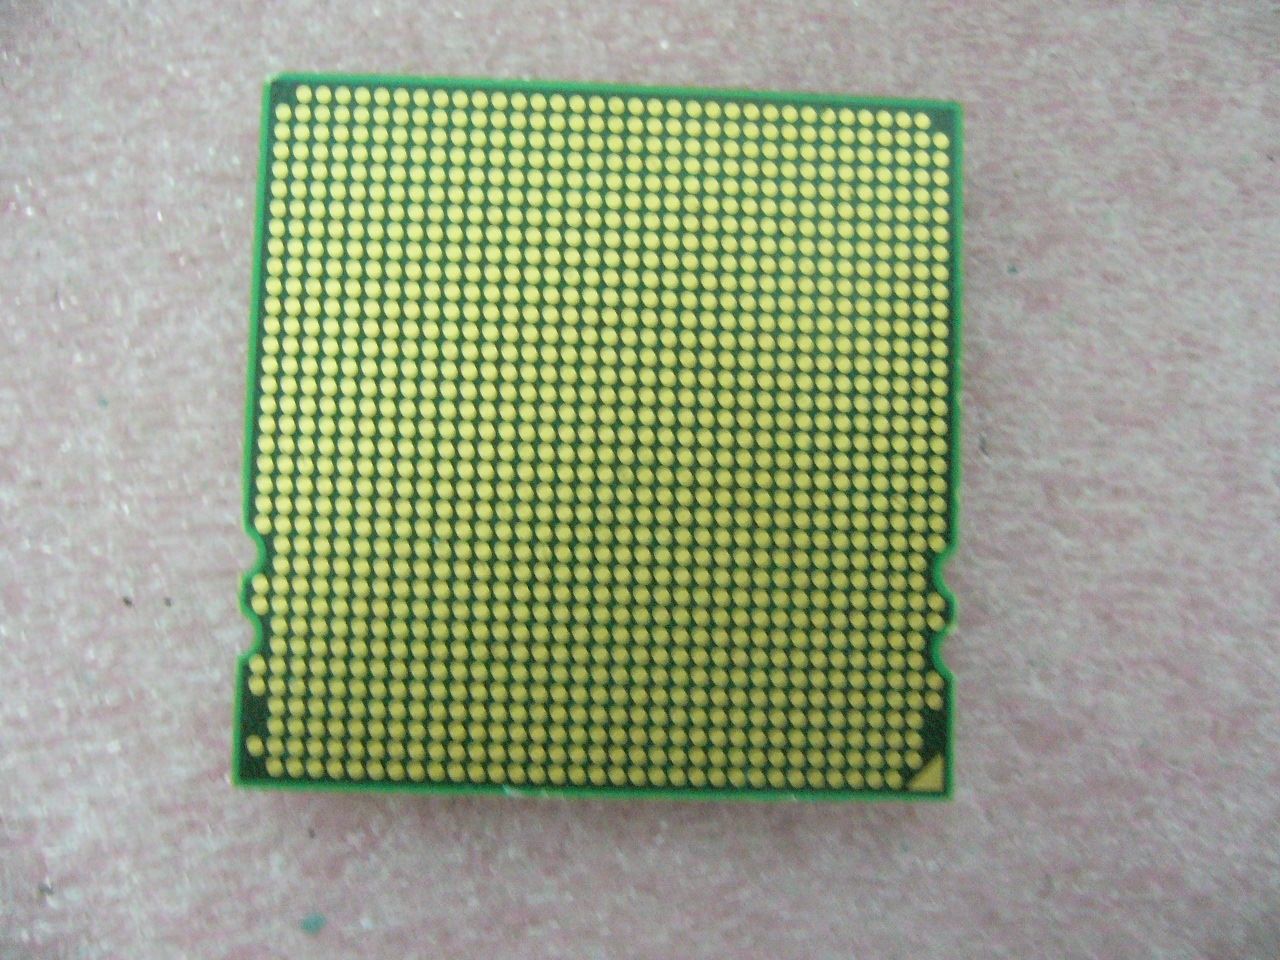 QTY 1x AMD Opteron 2347 HE 1.9 GHz Quad-Core (OS2347PAL4BGH) CPU Socket F 1207 - zum Schließen ins Bild klicken